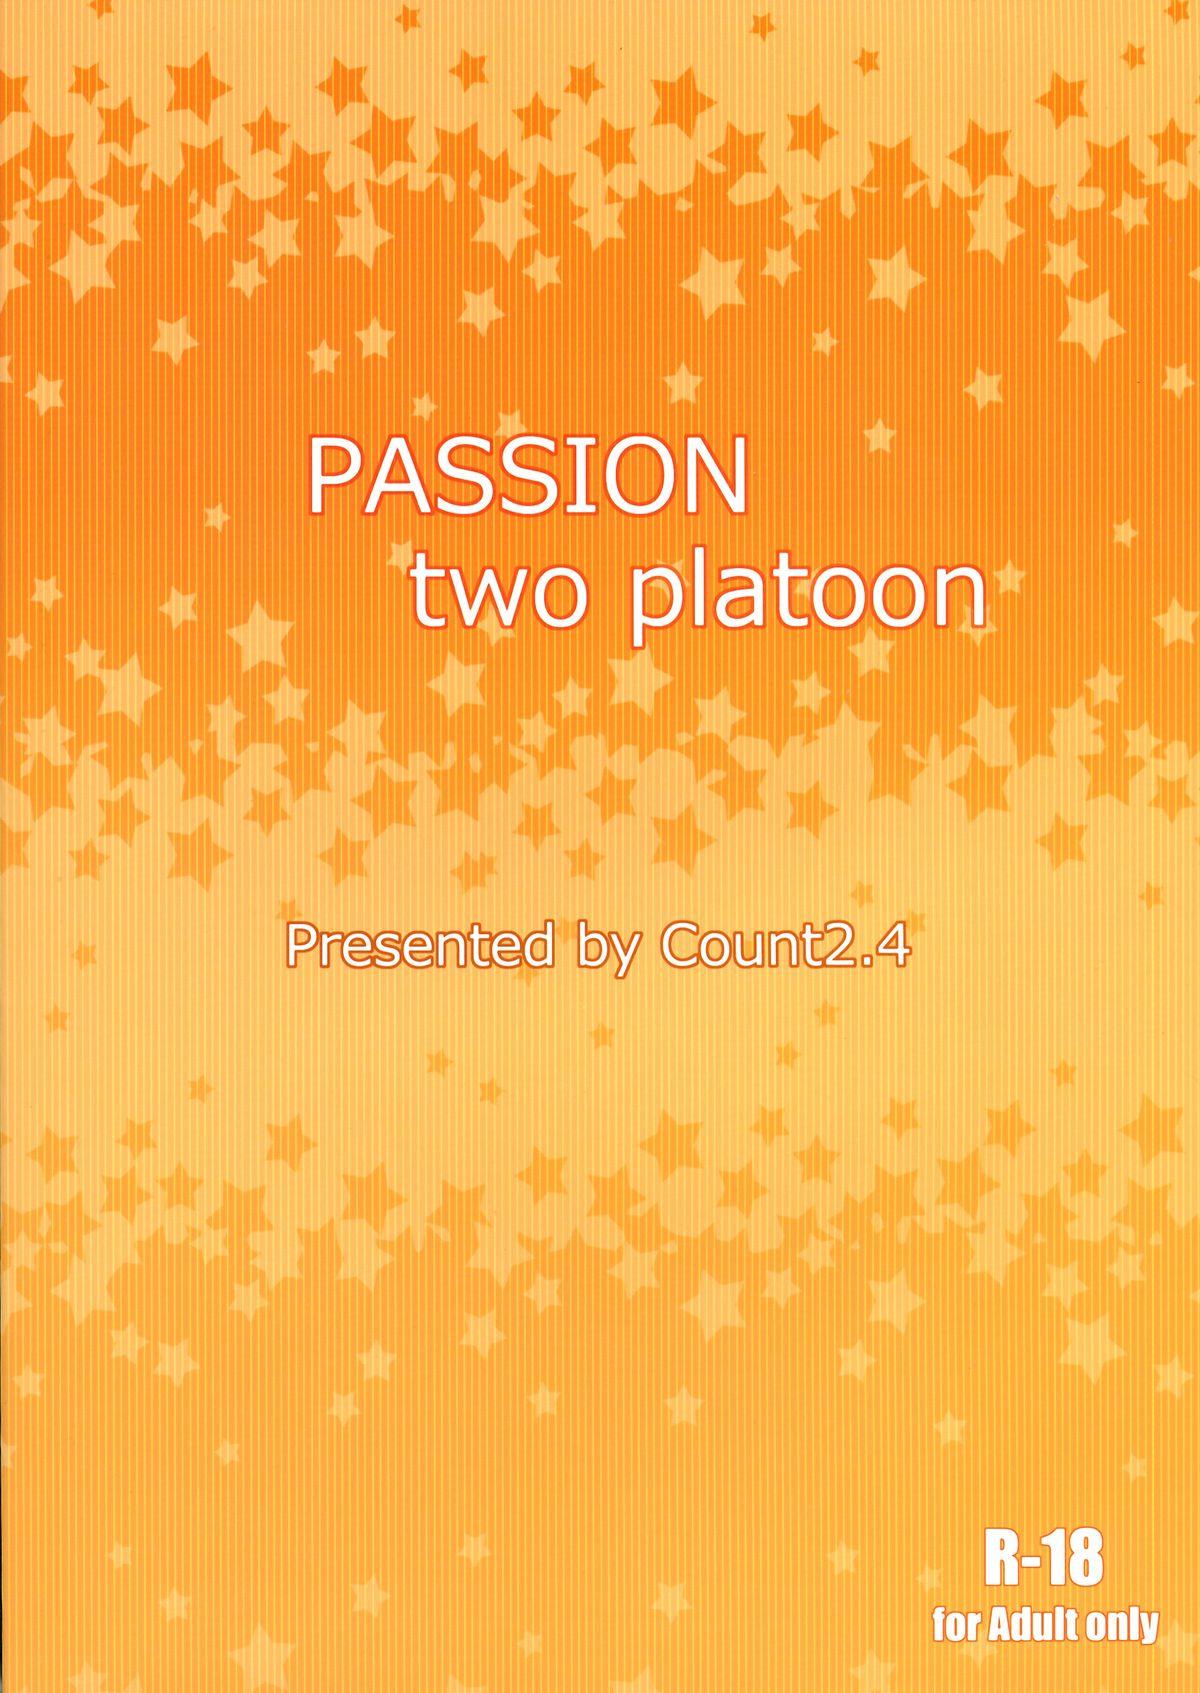 PASSION two platoon 25